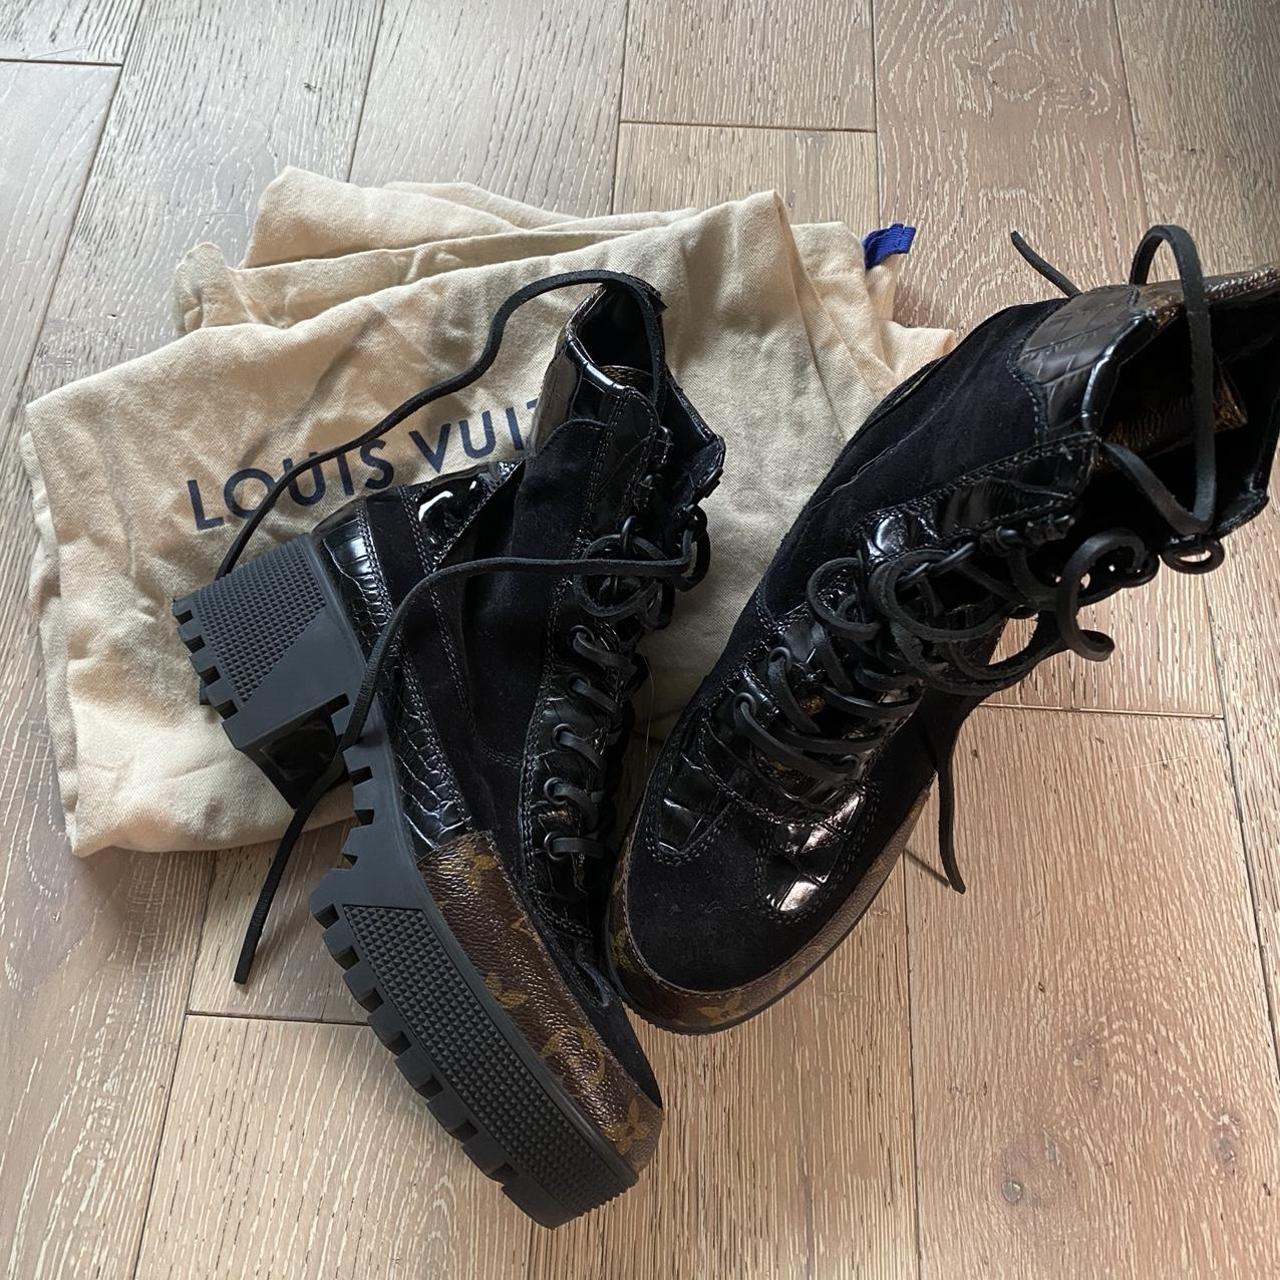 Tall black Louis Vuitton rain boots I purchased - Depop